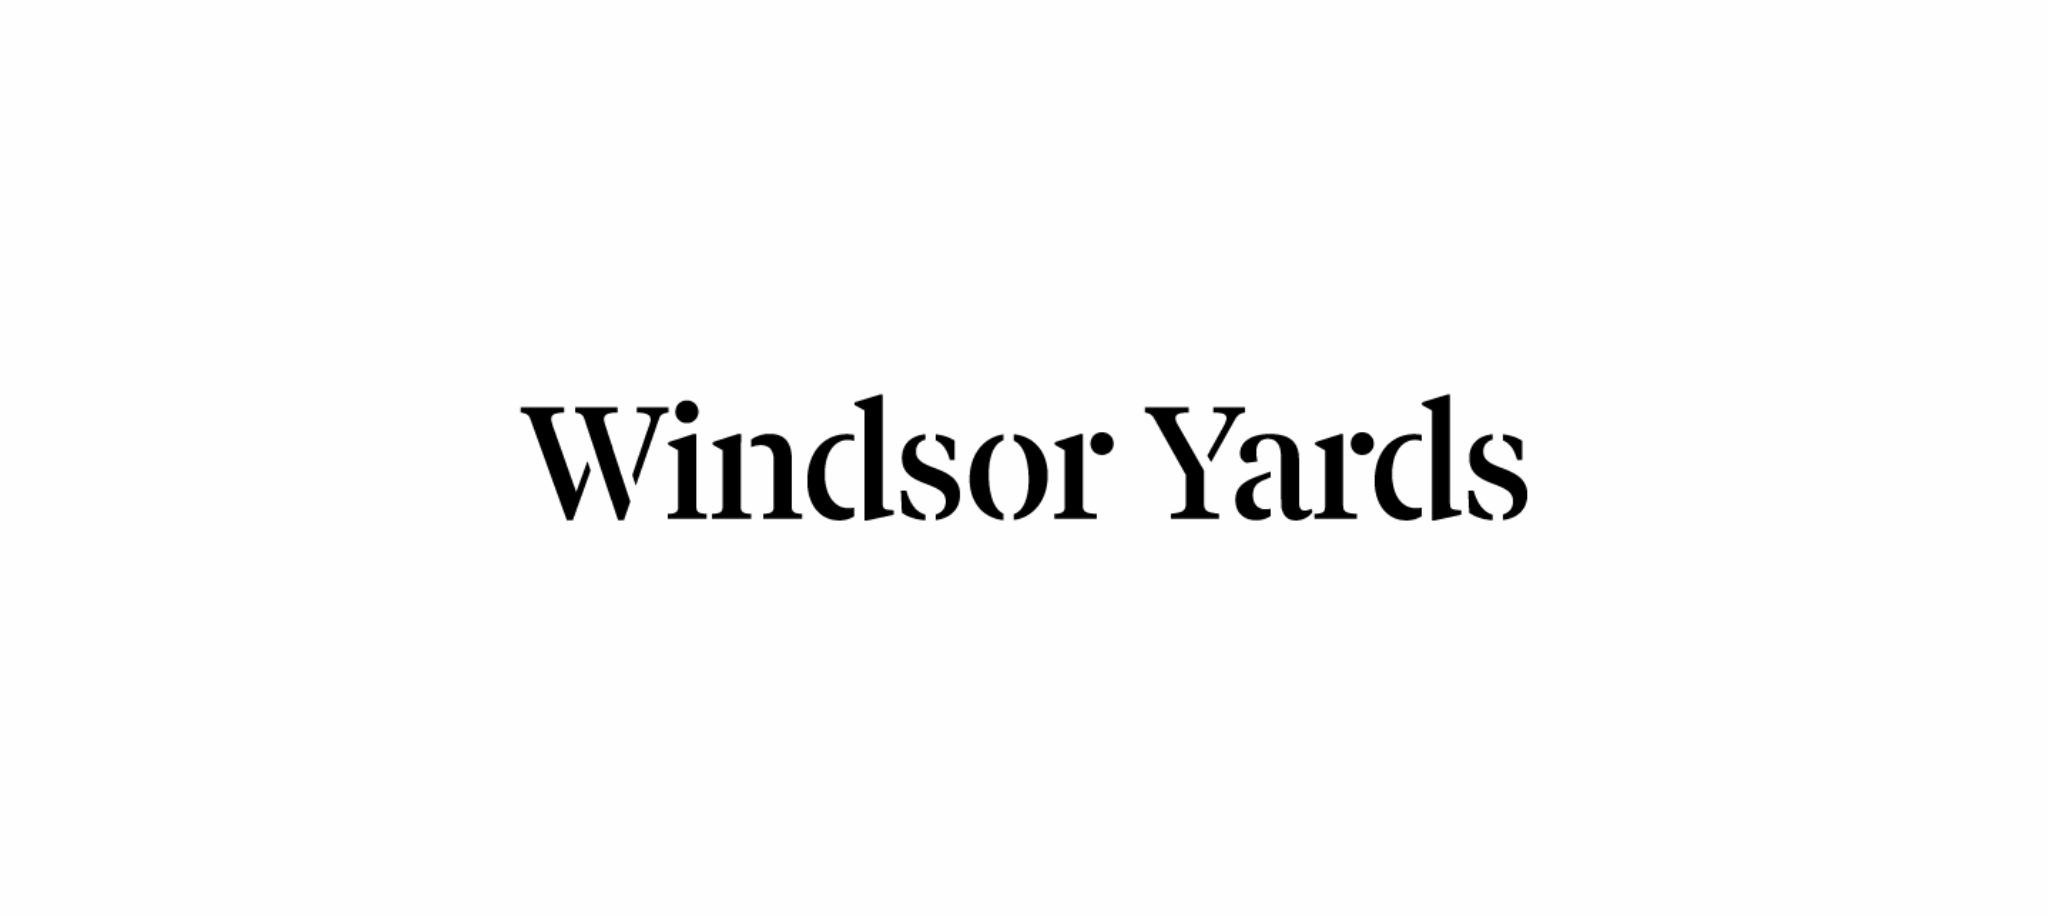 Windsor-yards-header-revo